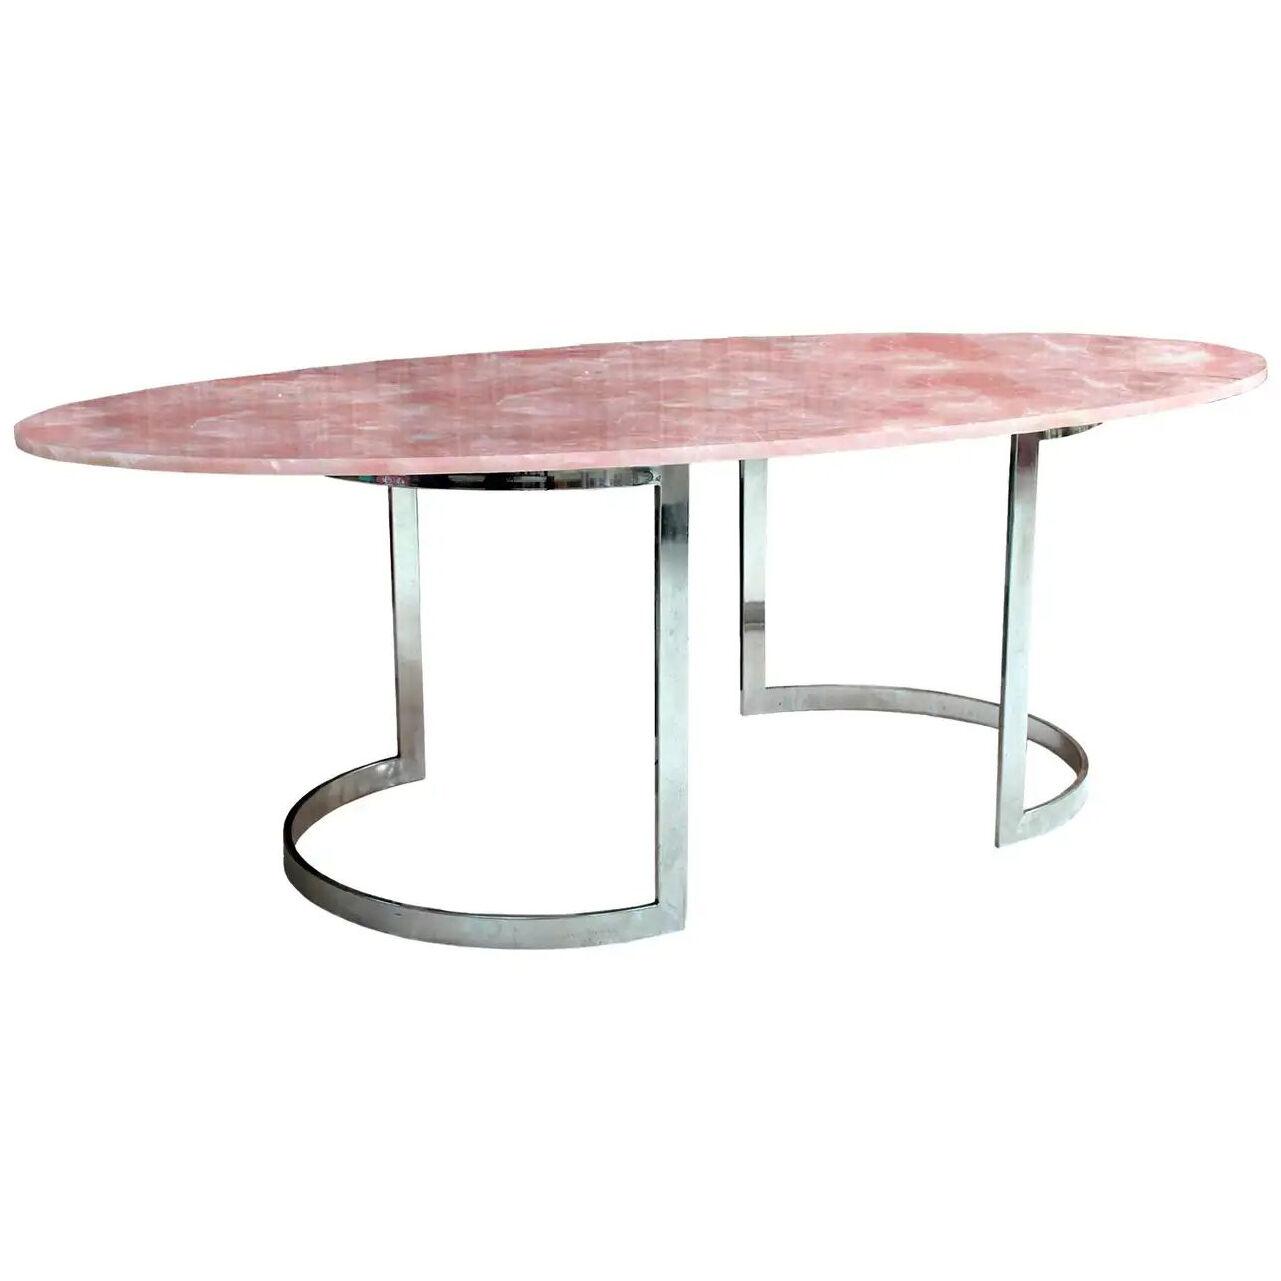 Contemporary Dining Table Made of Rose Quartz Designed by L.A. Studio